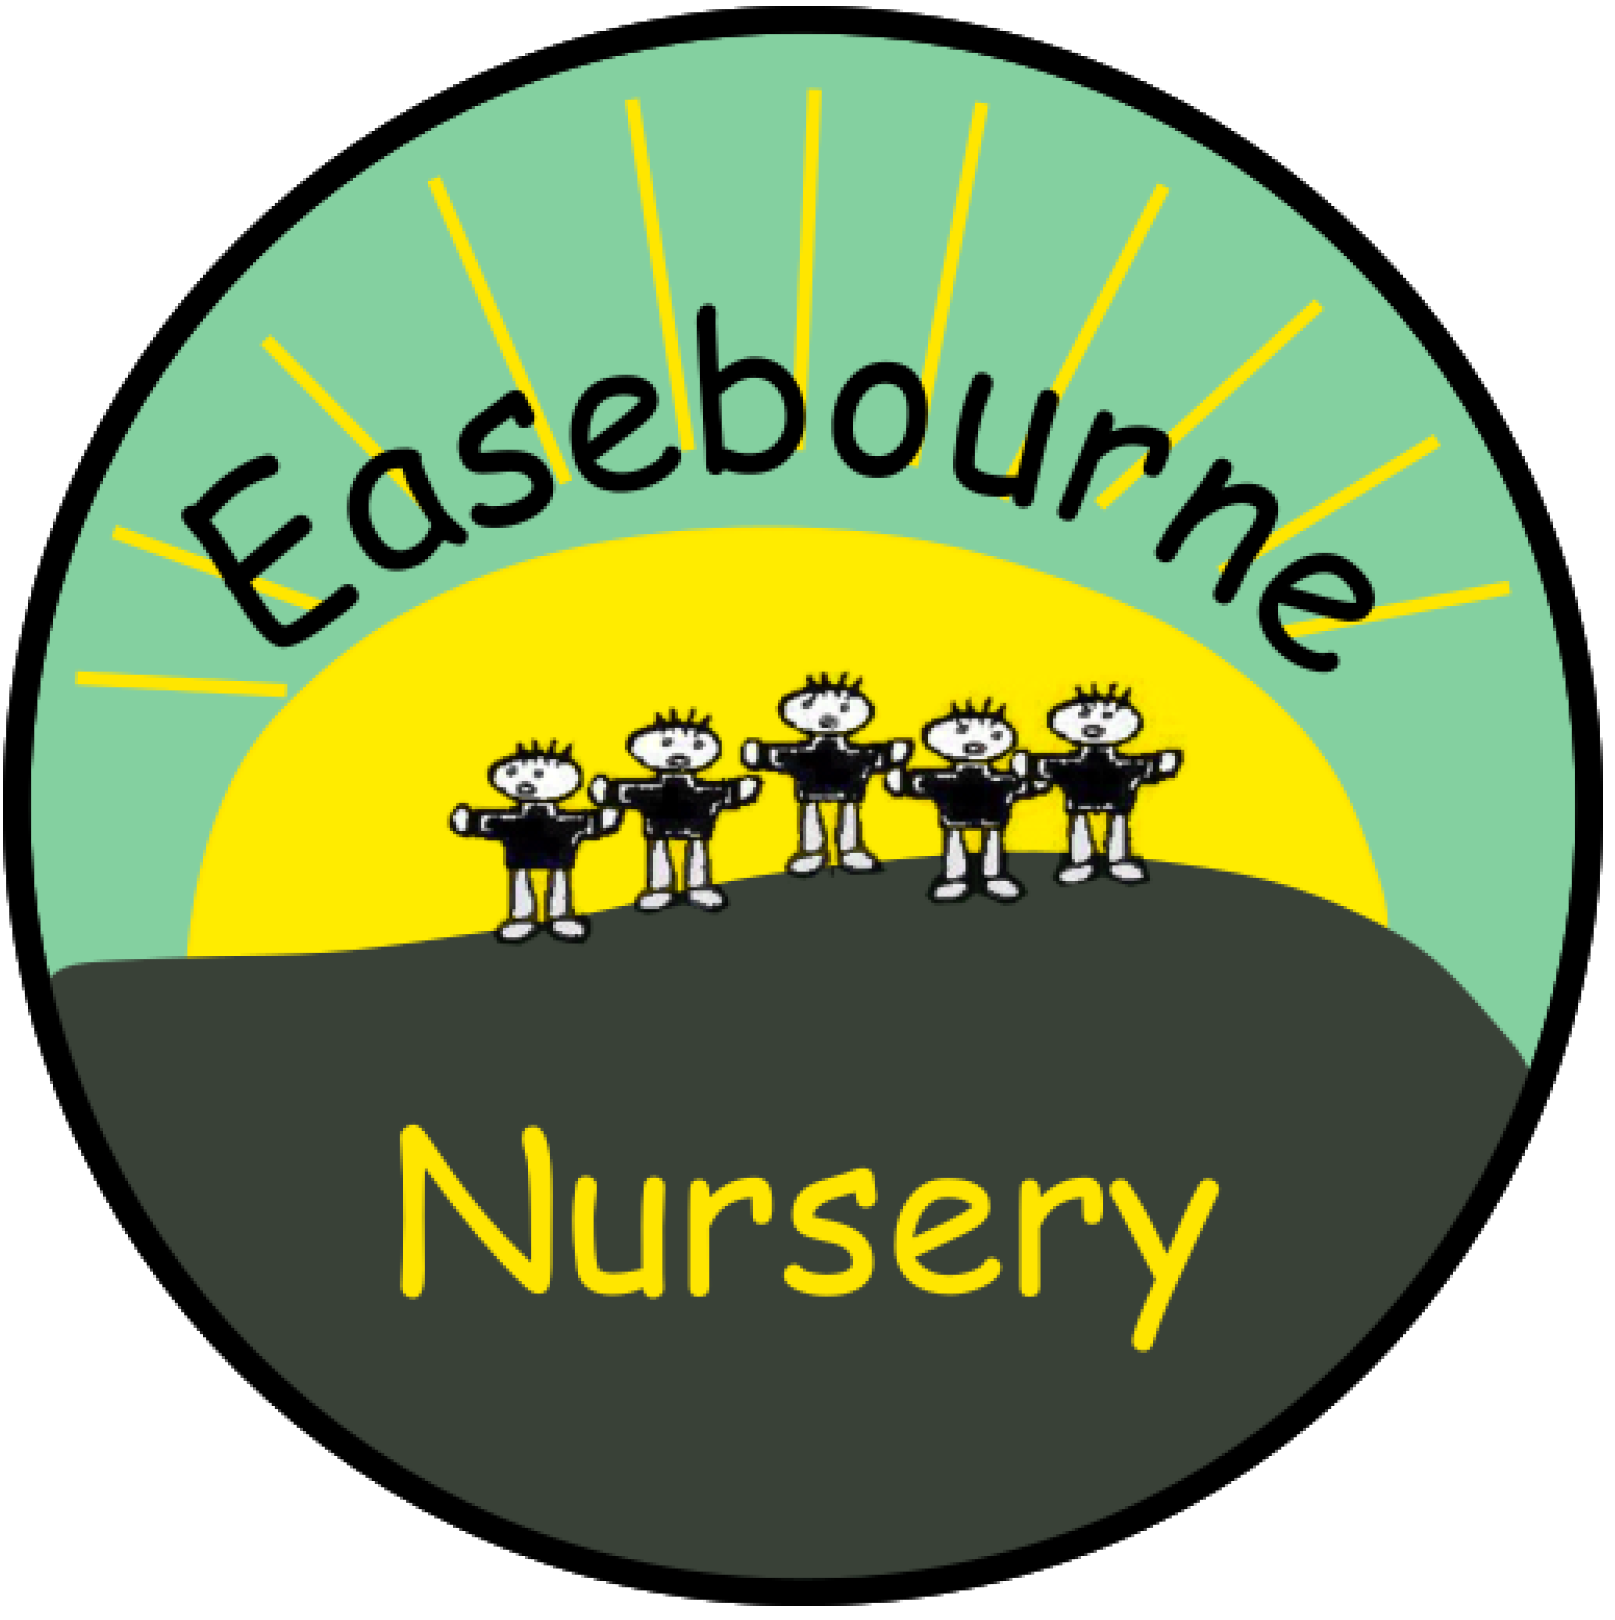 Easebourne Nursery